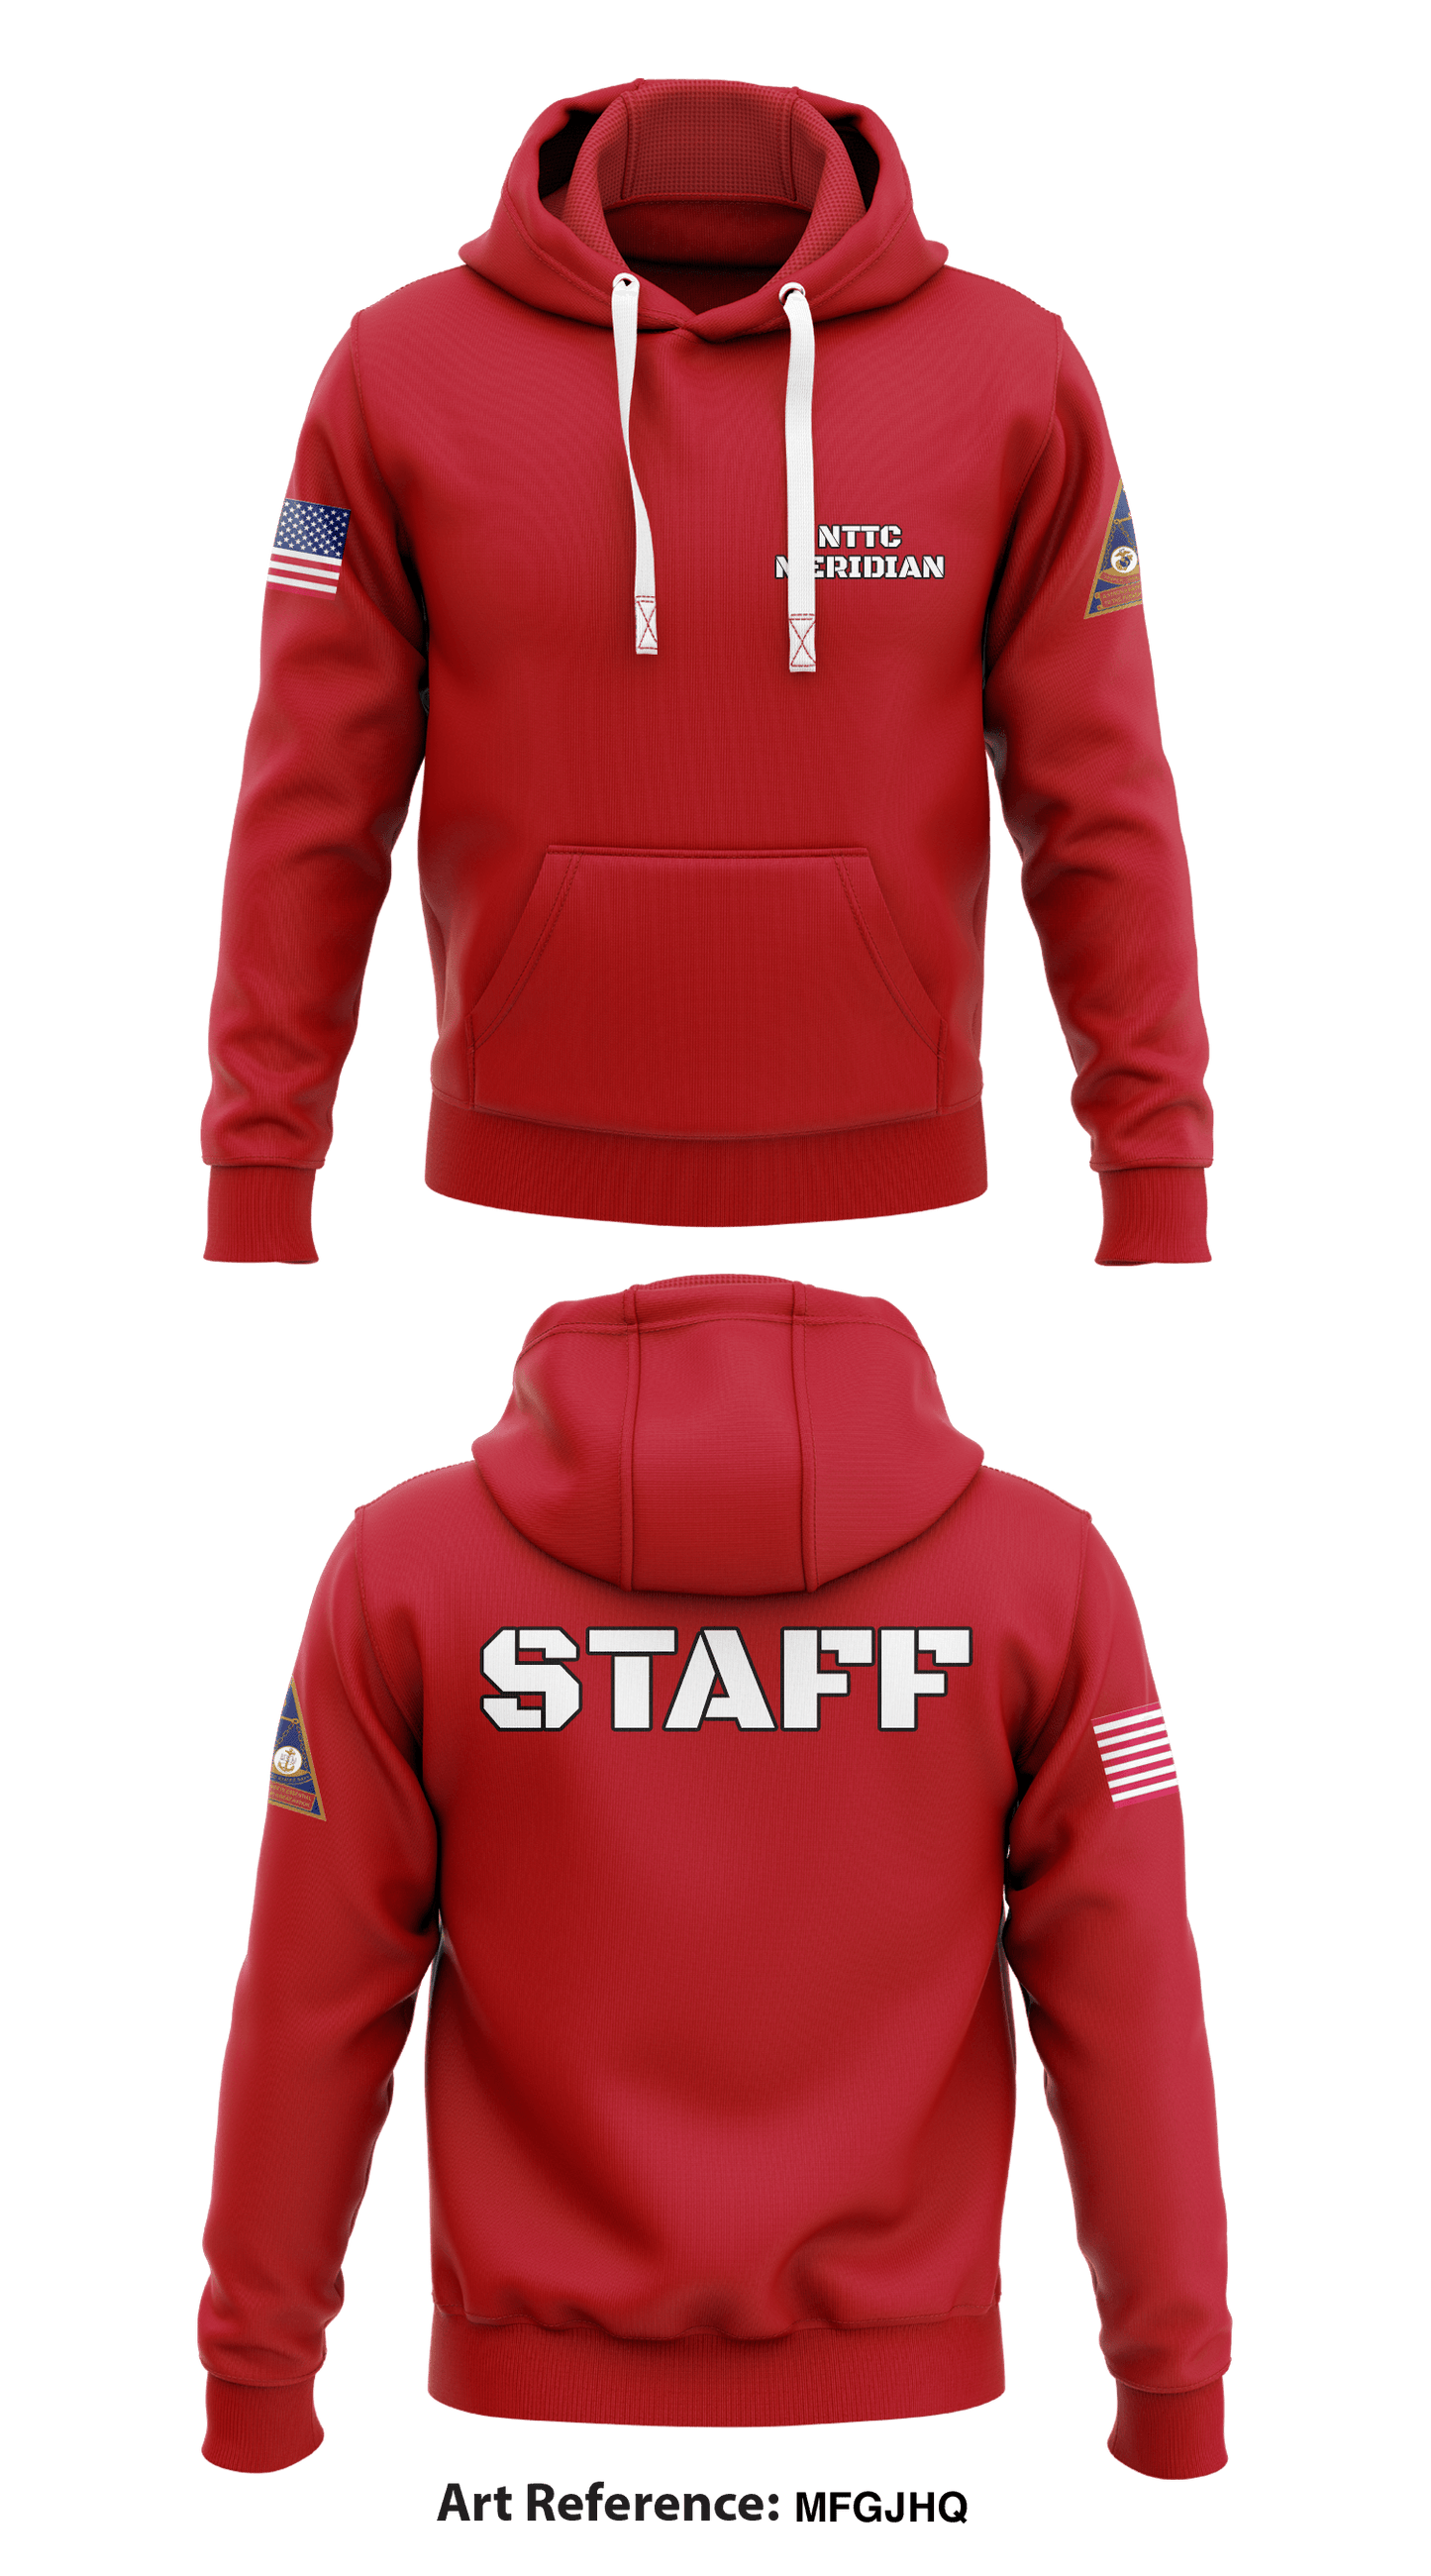 NTTC MERIDIAN Store 1  Core Men's Hooded Performance Sweatshirt - MfGjhQ